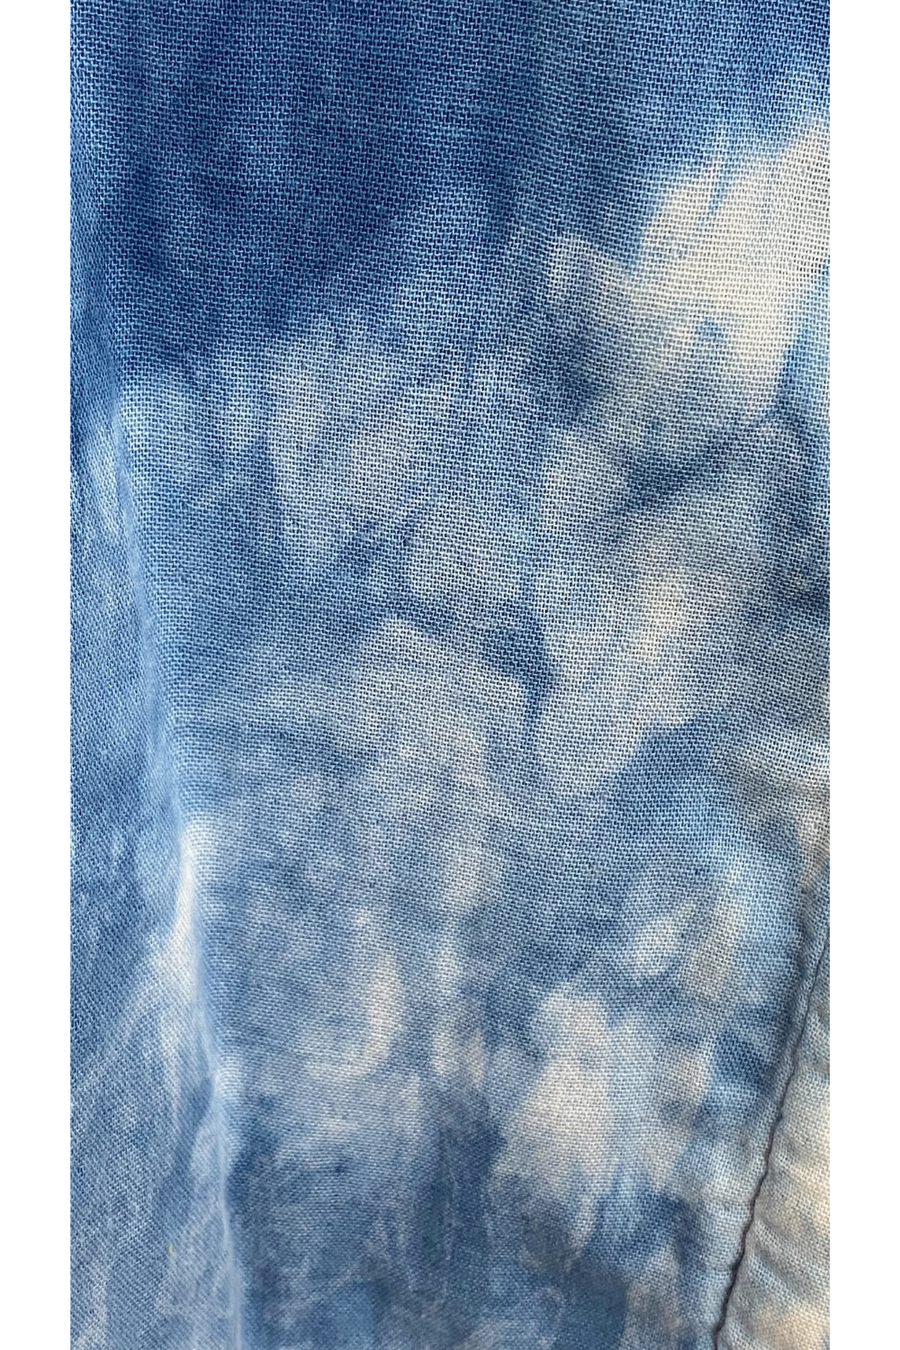 Flowy Lightweight Ida Pants in Navy Blue | Organic Cotton Double Gauze